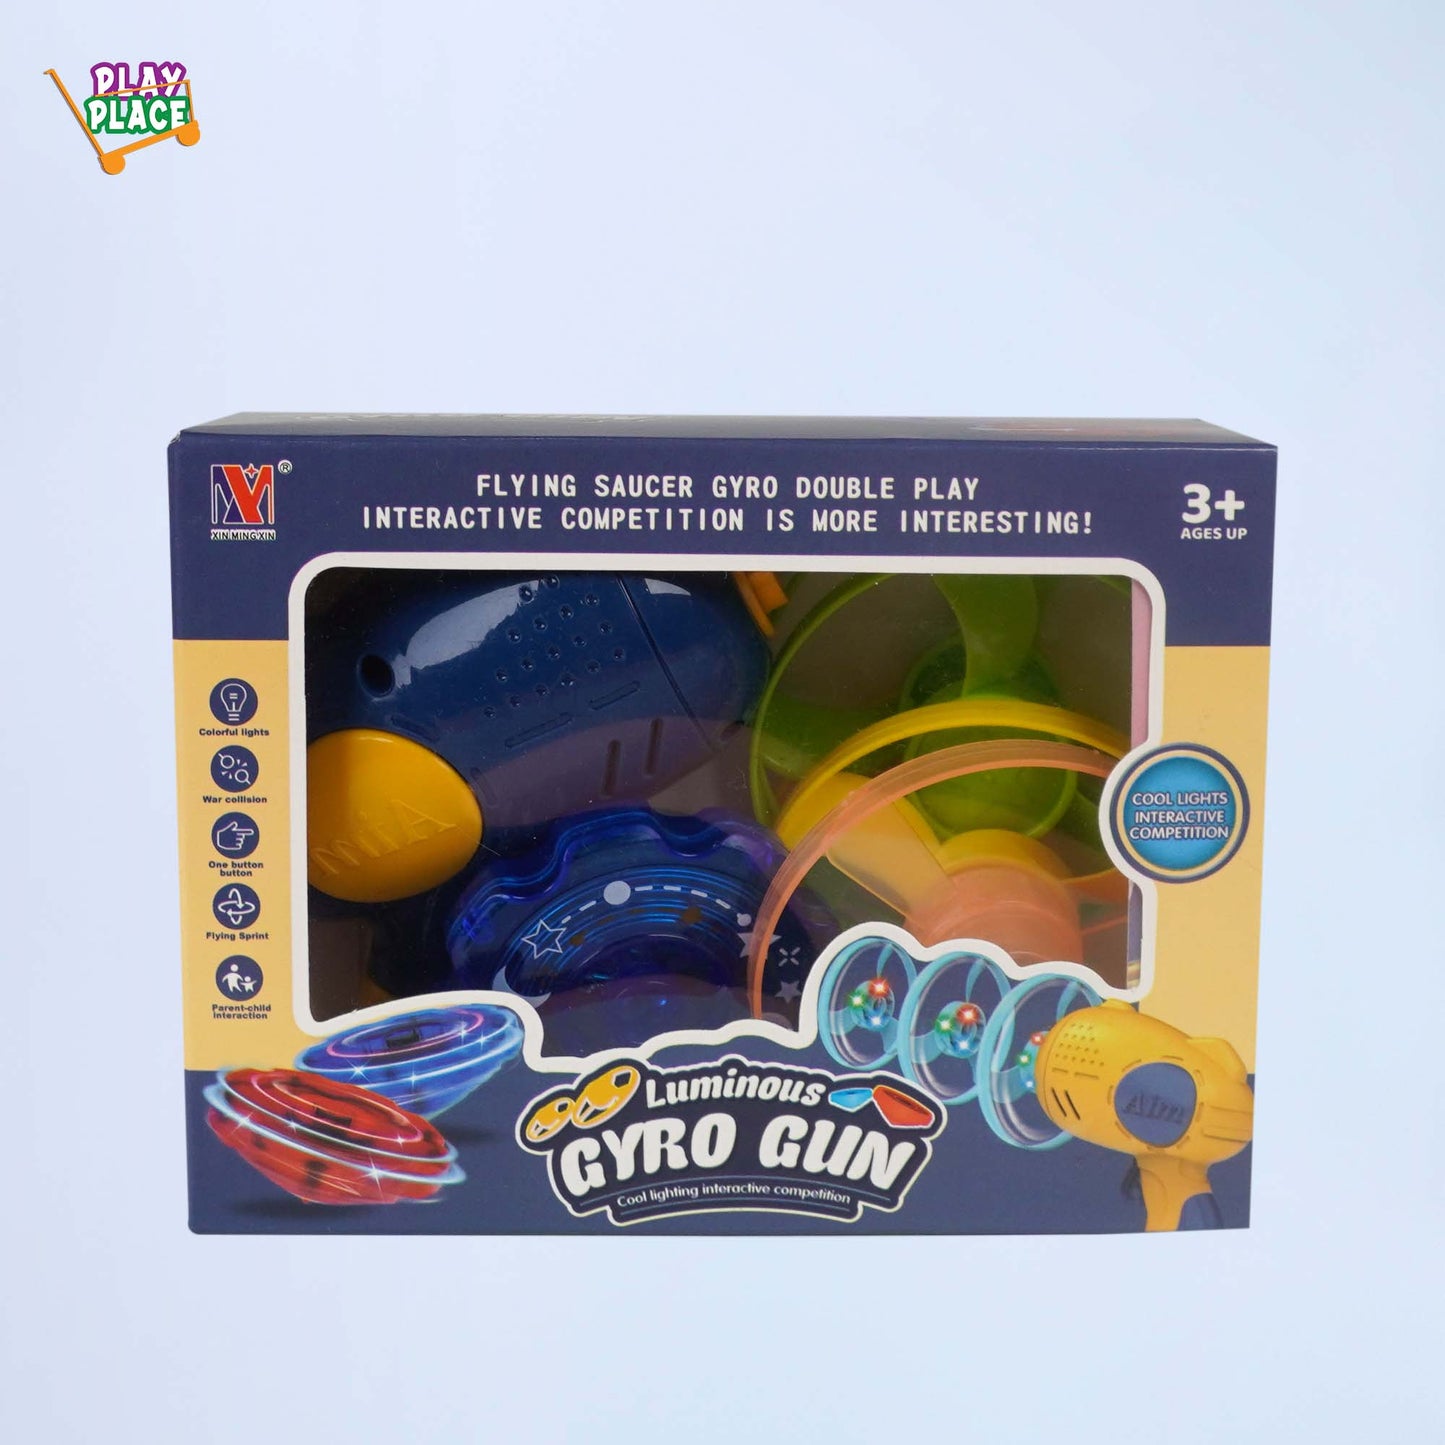 Gyro Gun